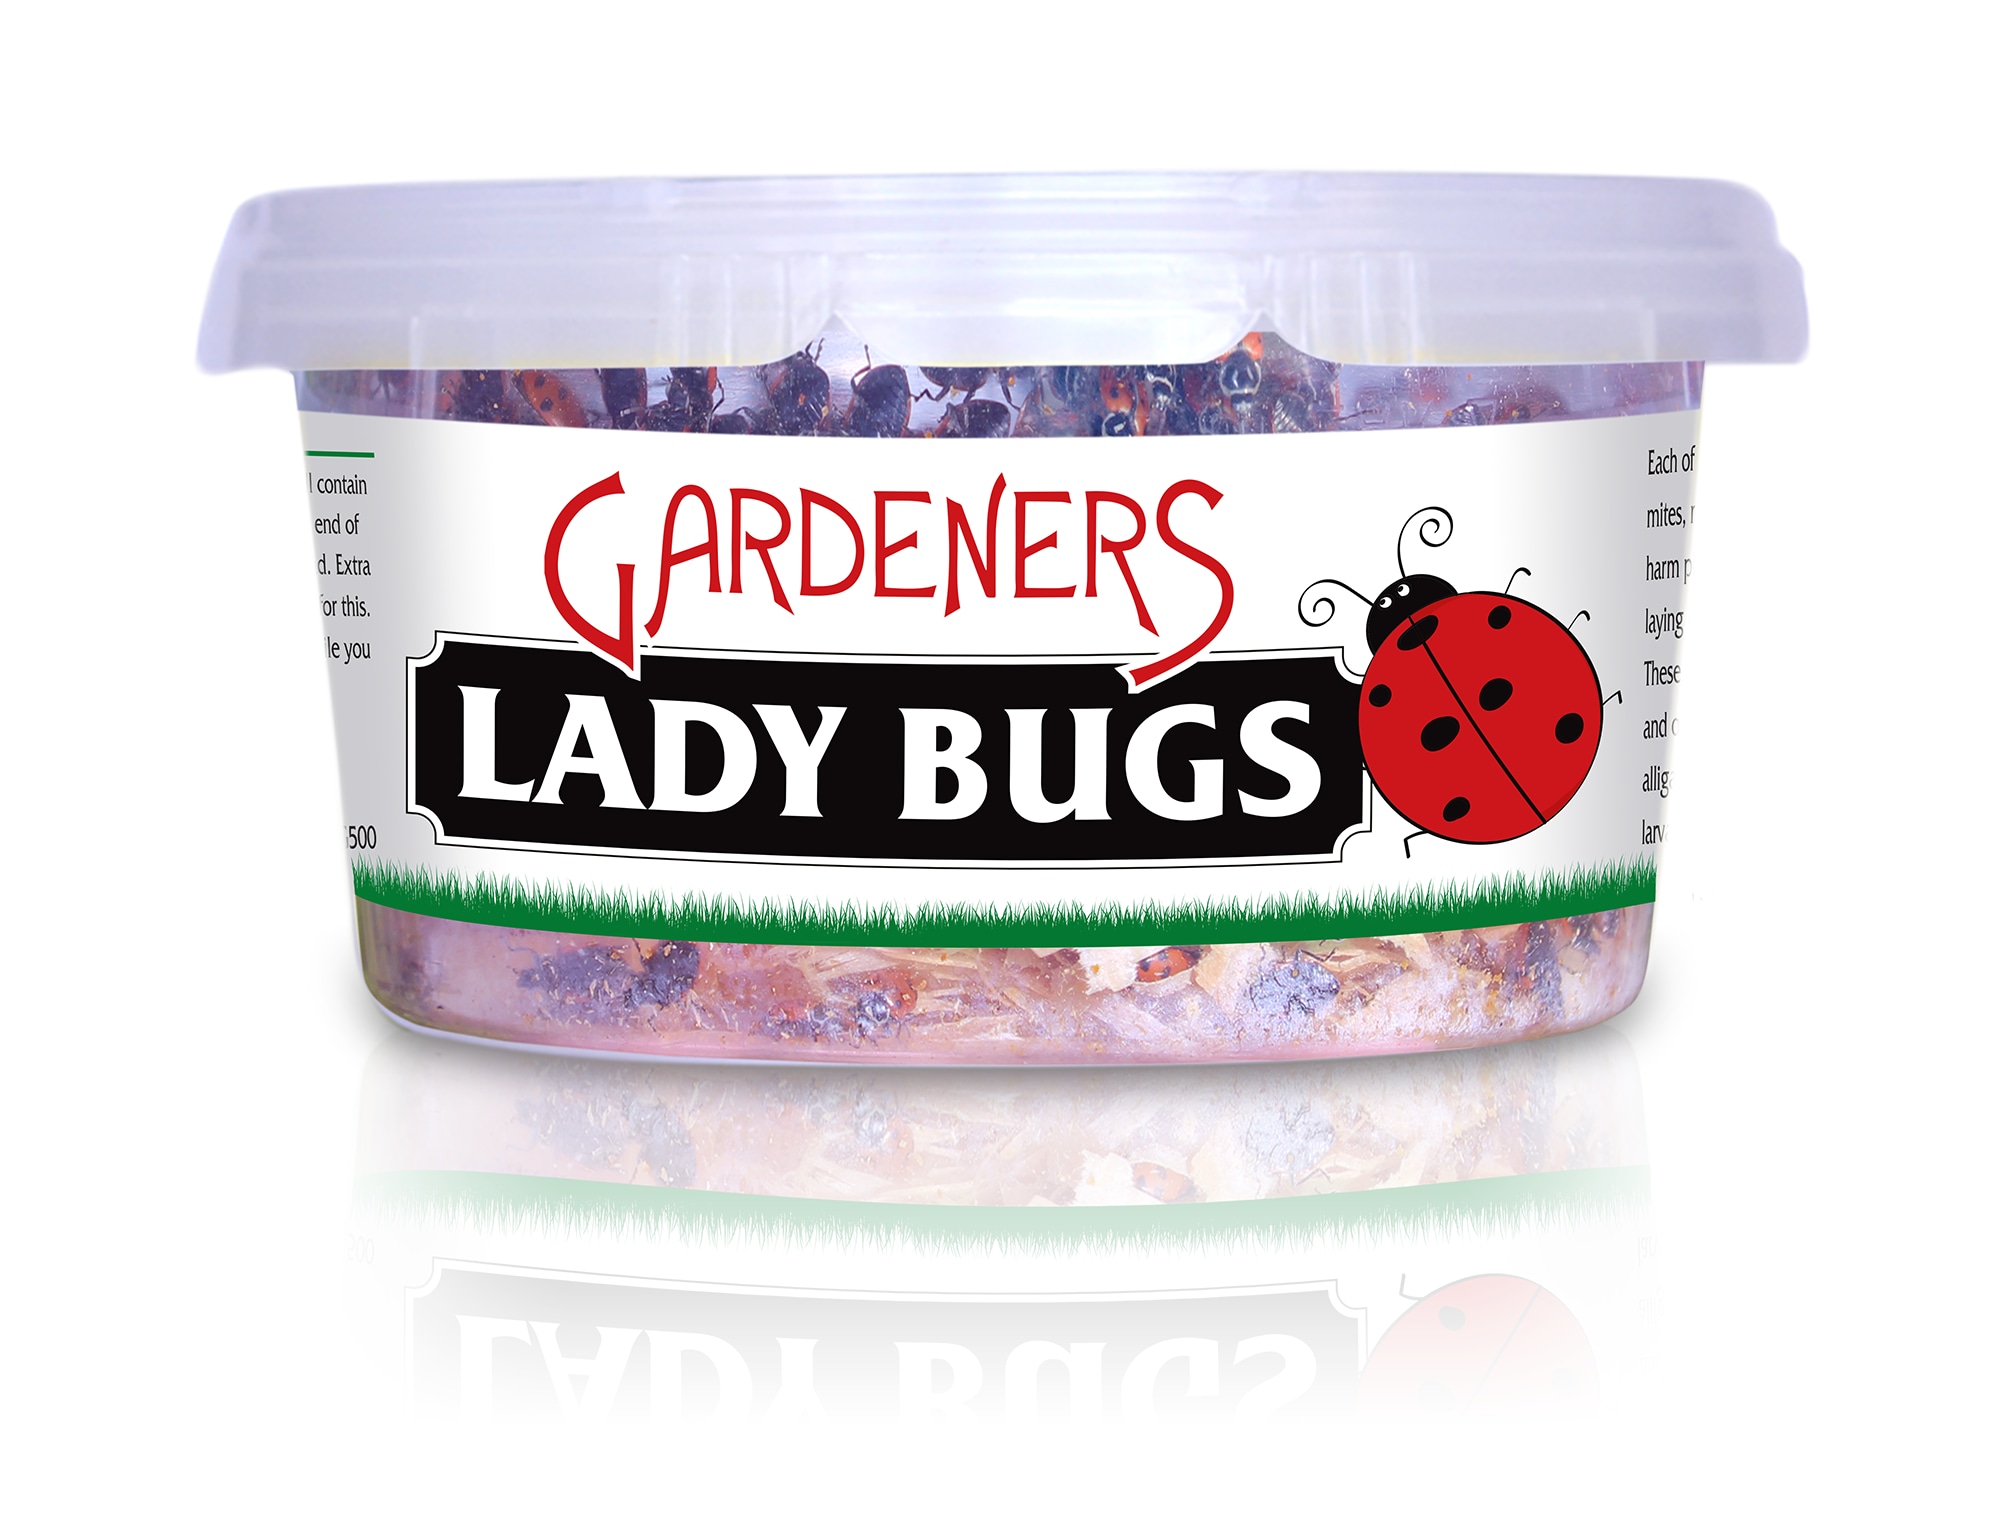 Gardeners Organic Ladybugs for Pest Control - Safe & Effective